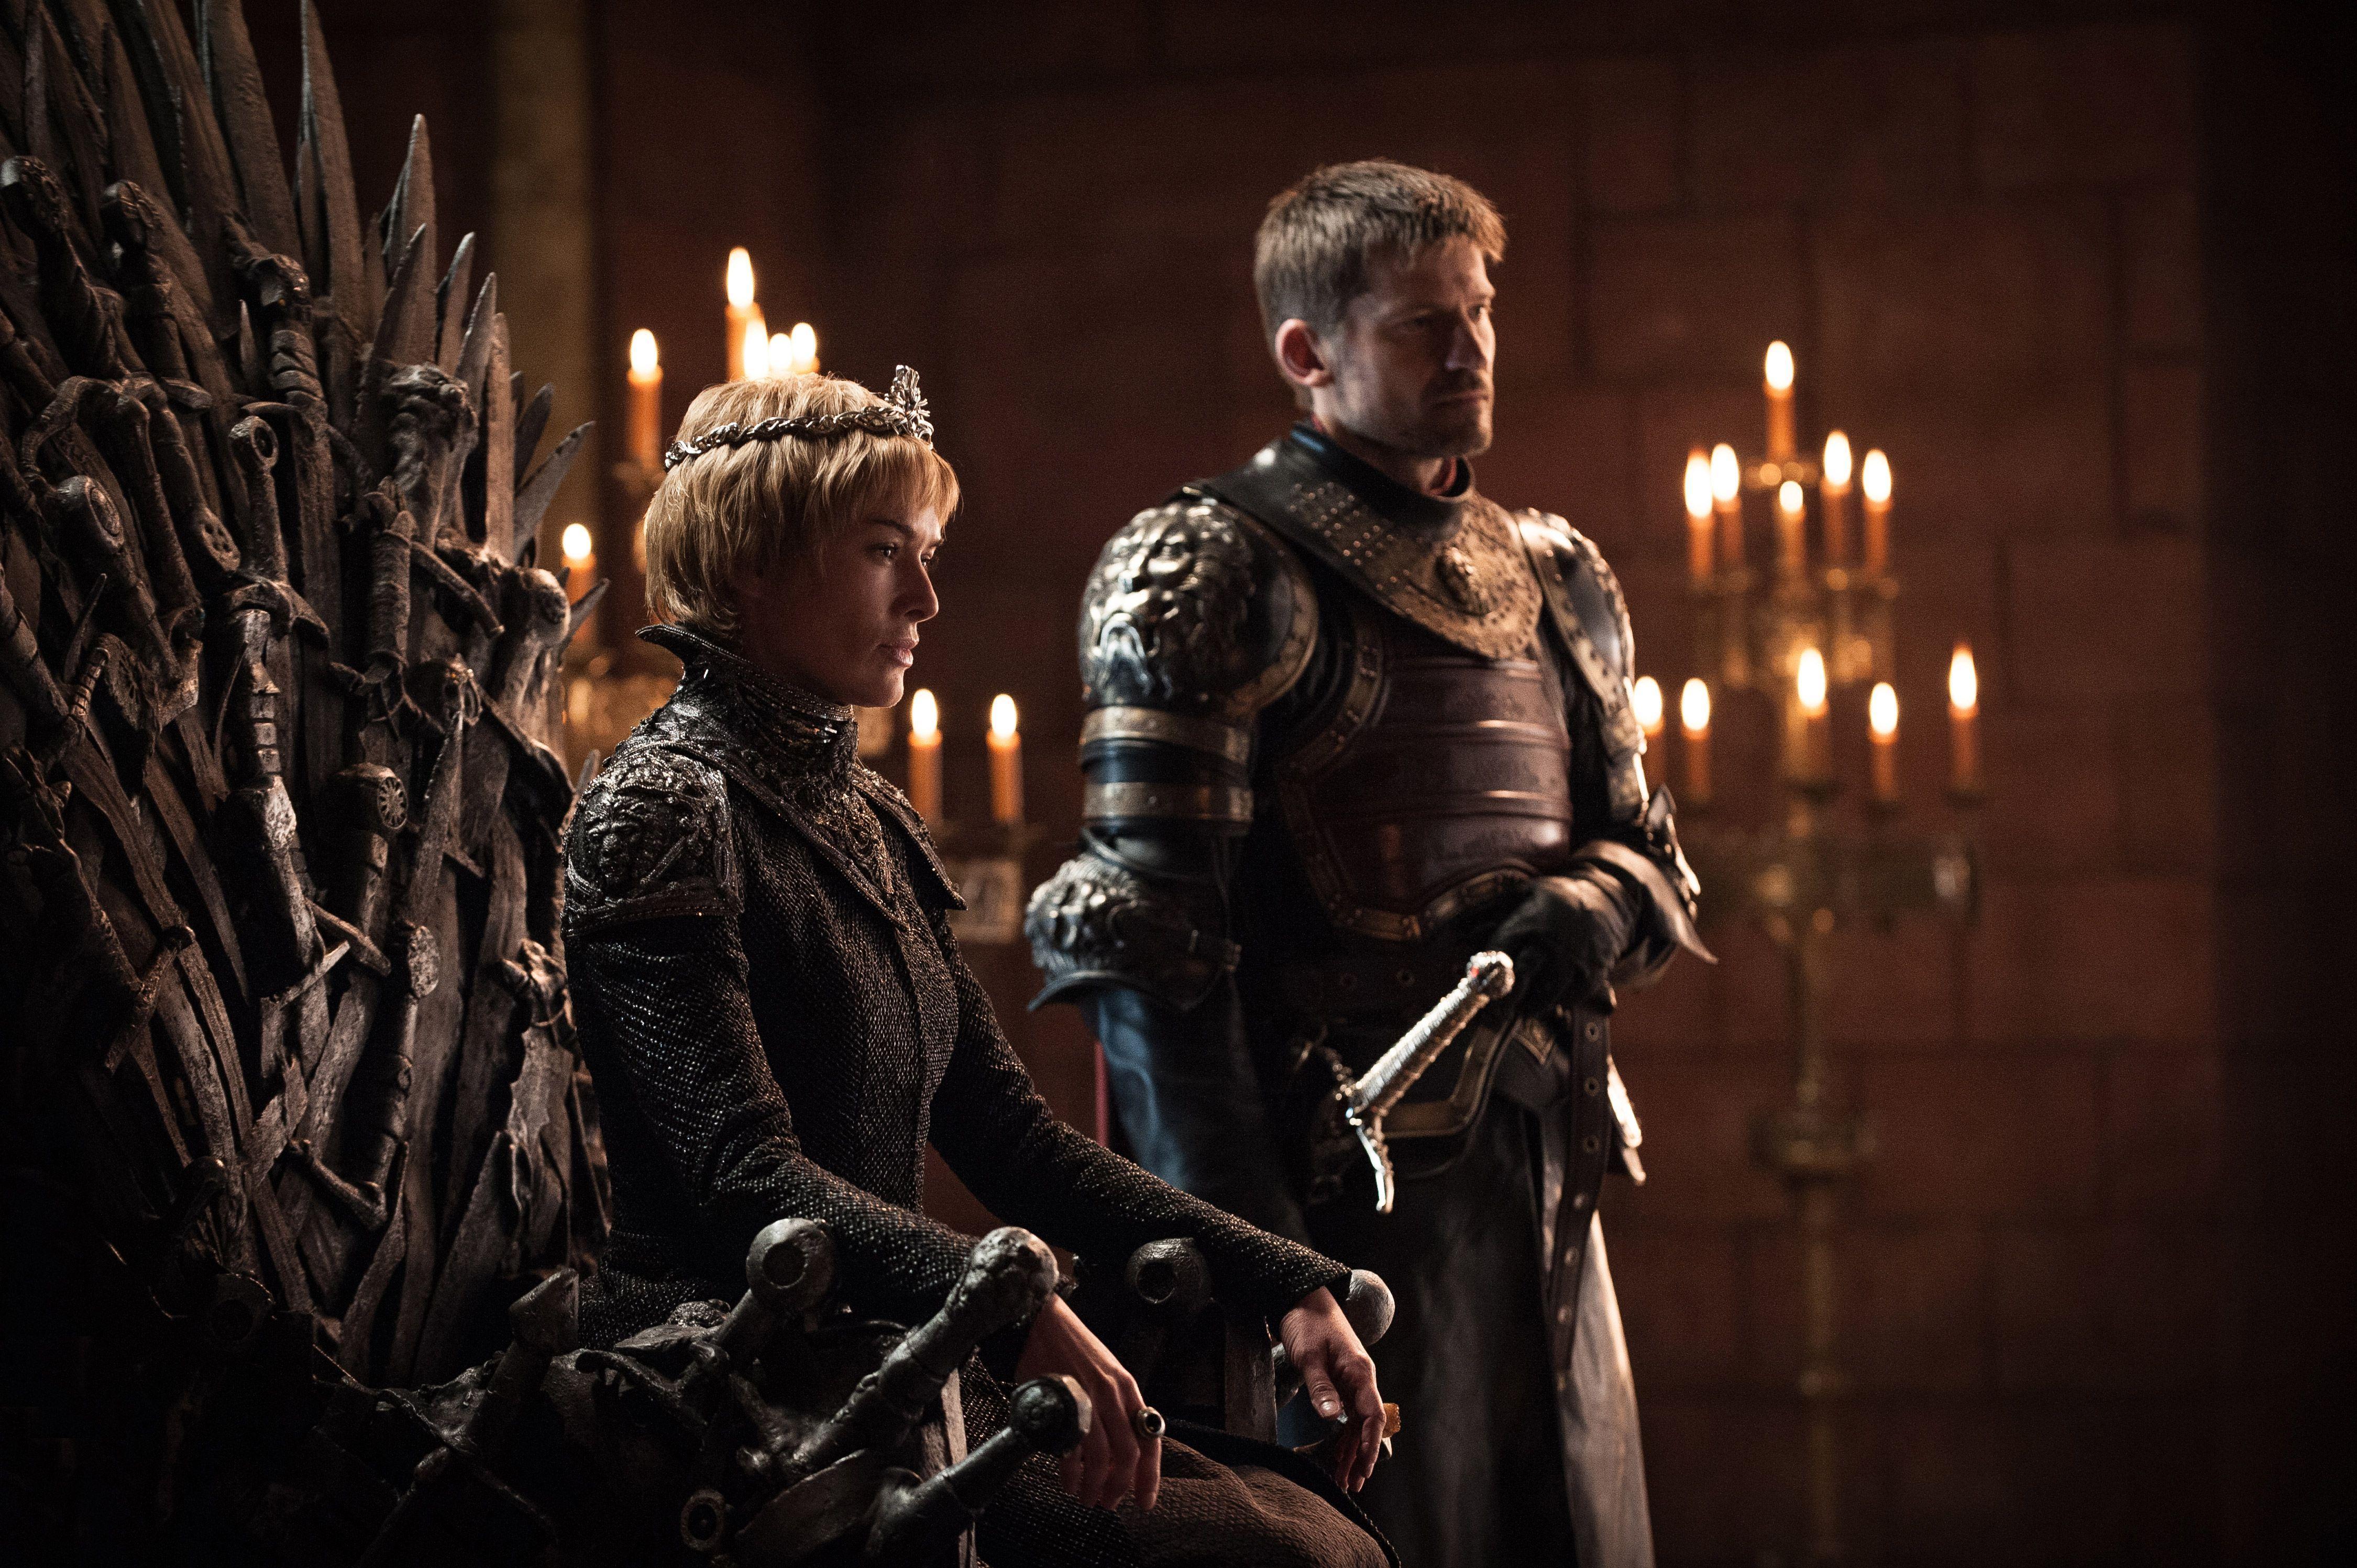 Lena Headey as Cersei Lannister and Nikolaj Coster Waldau as Jaime